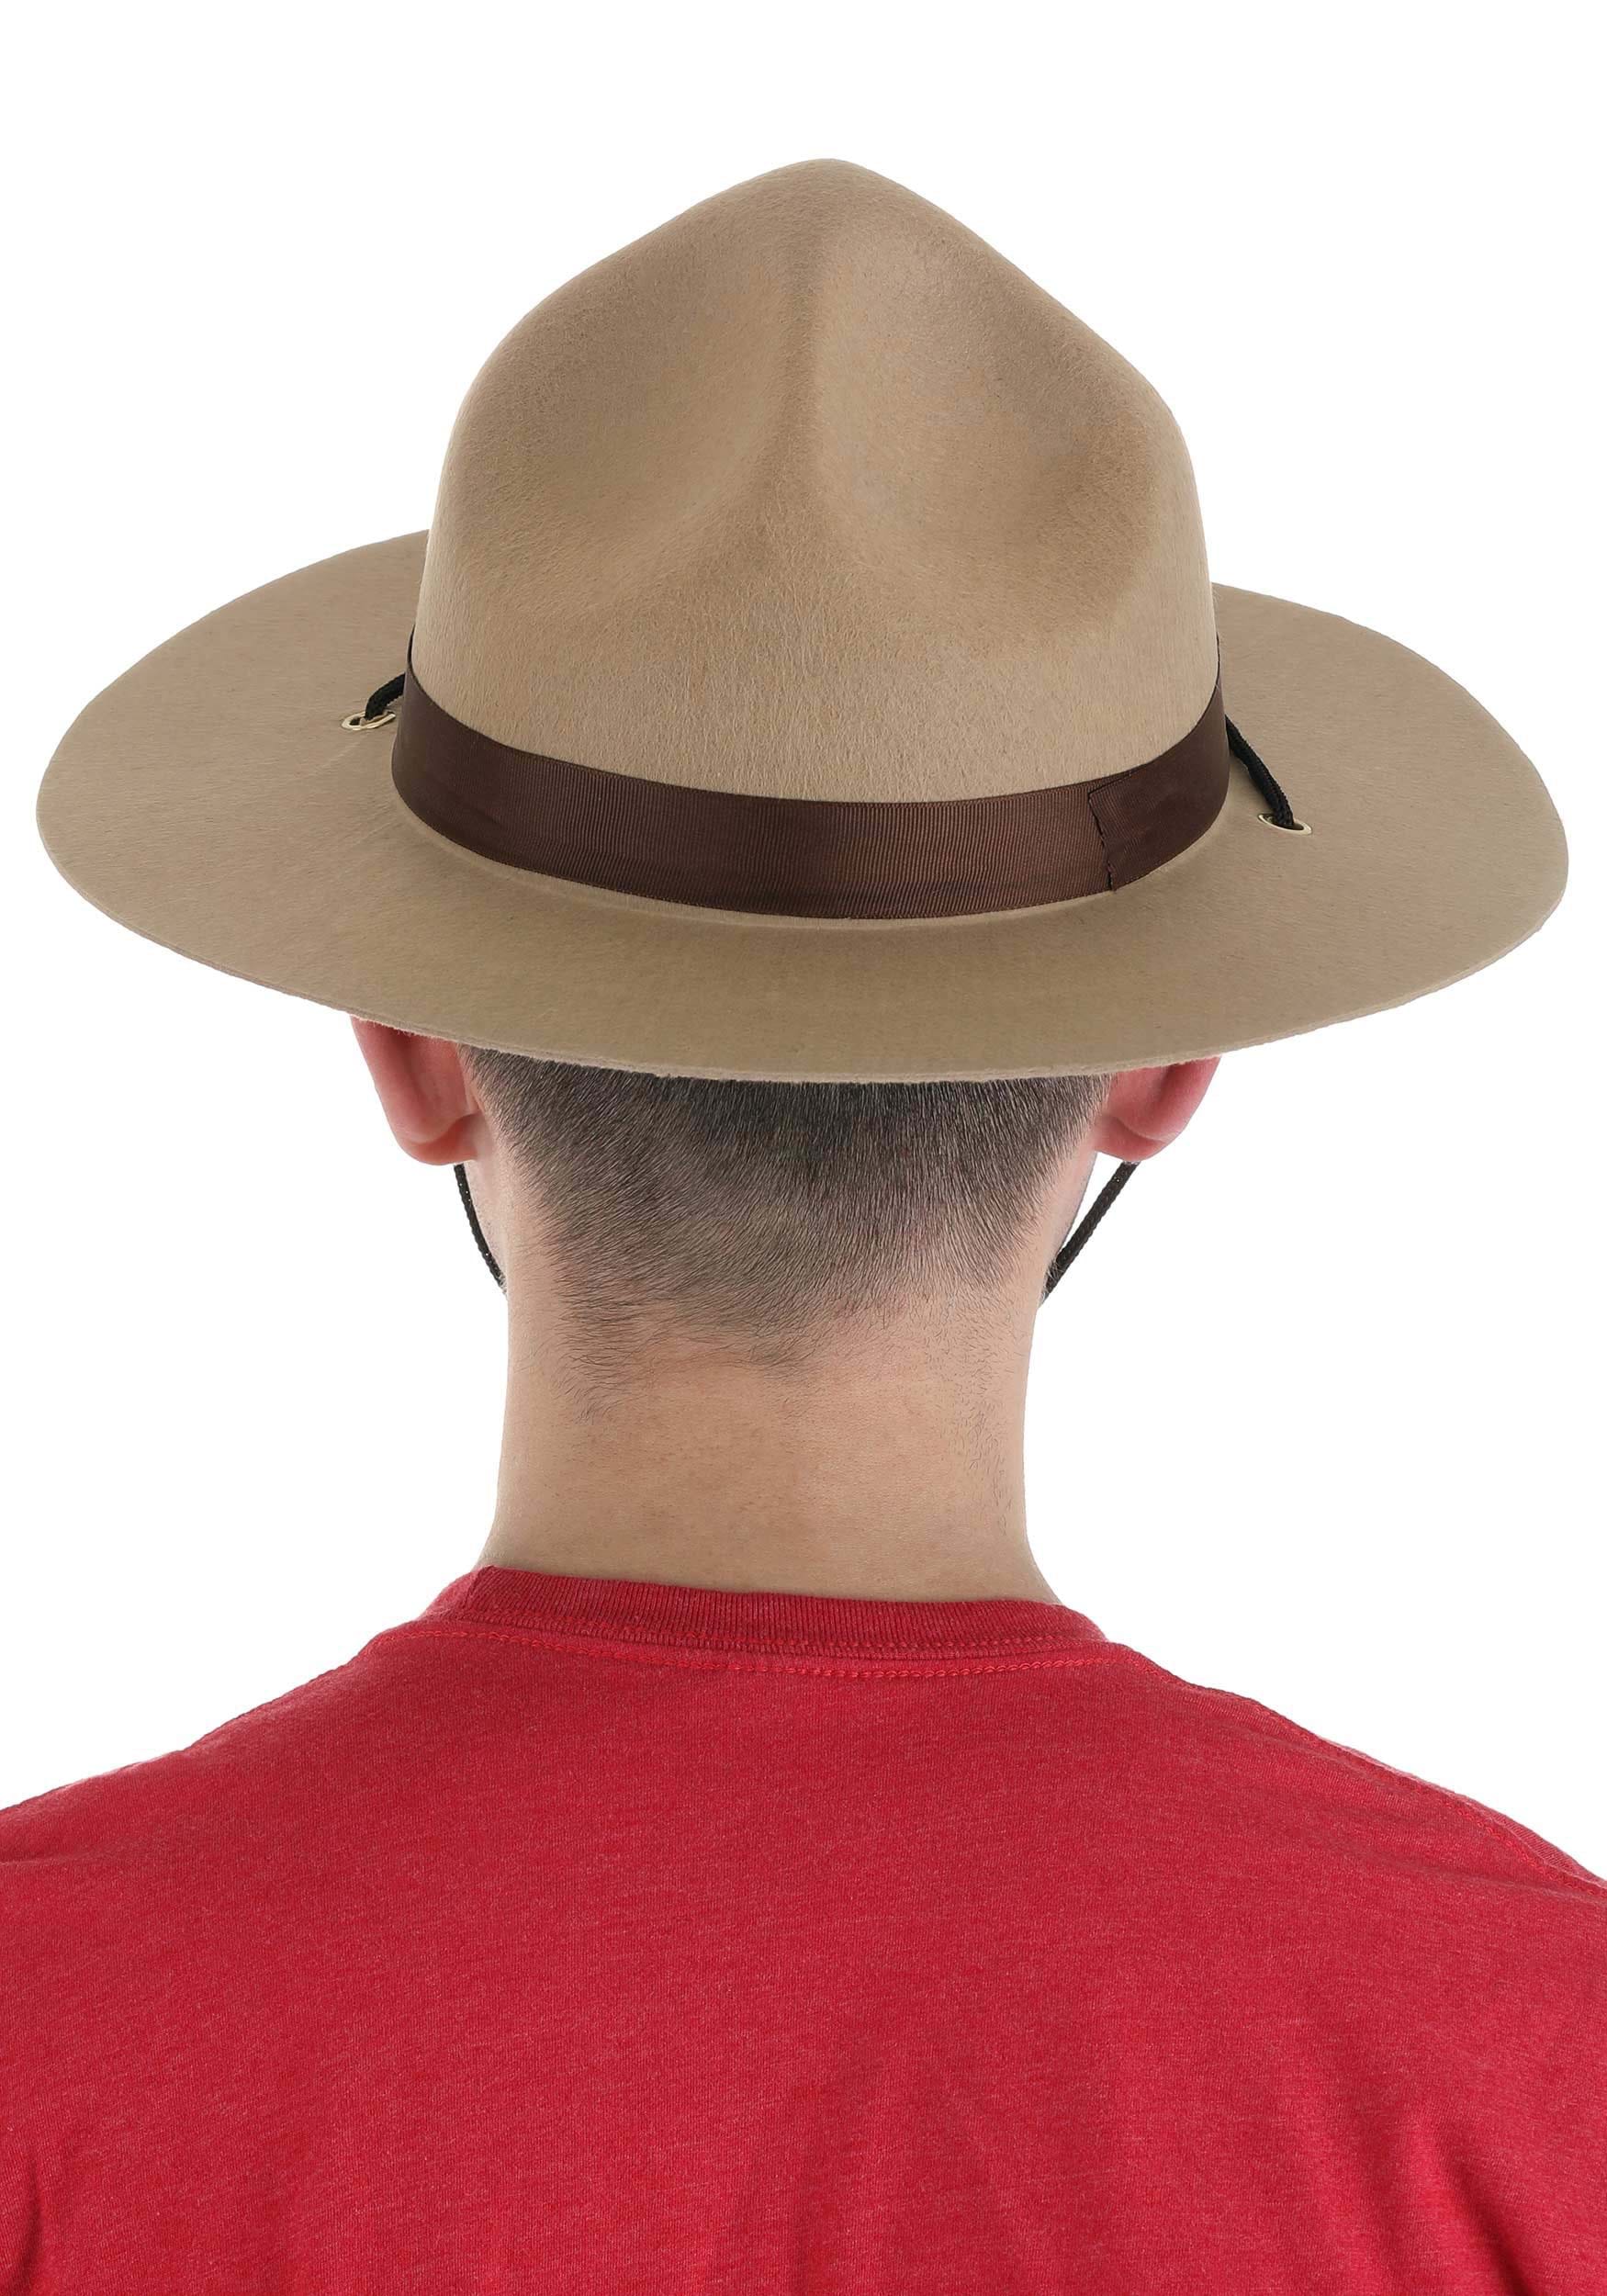 Mountie Adult Costume Hat